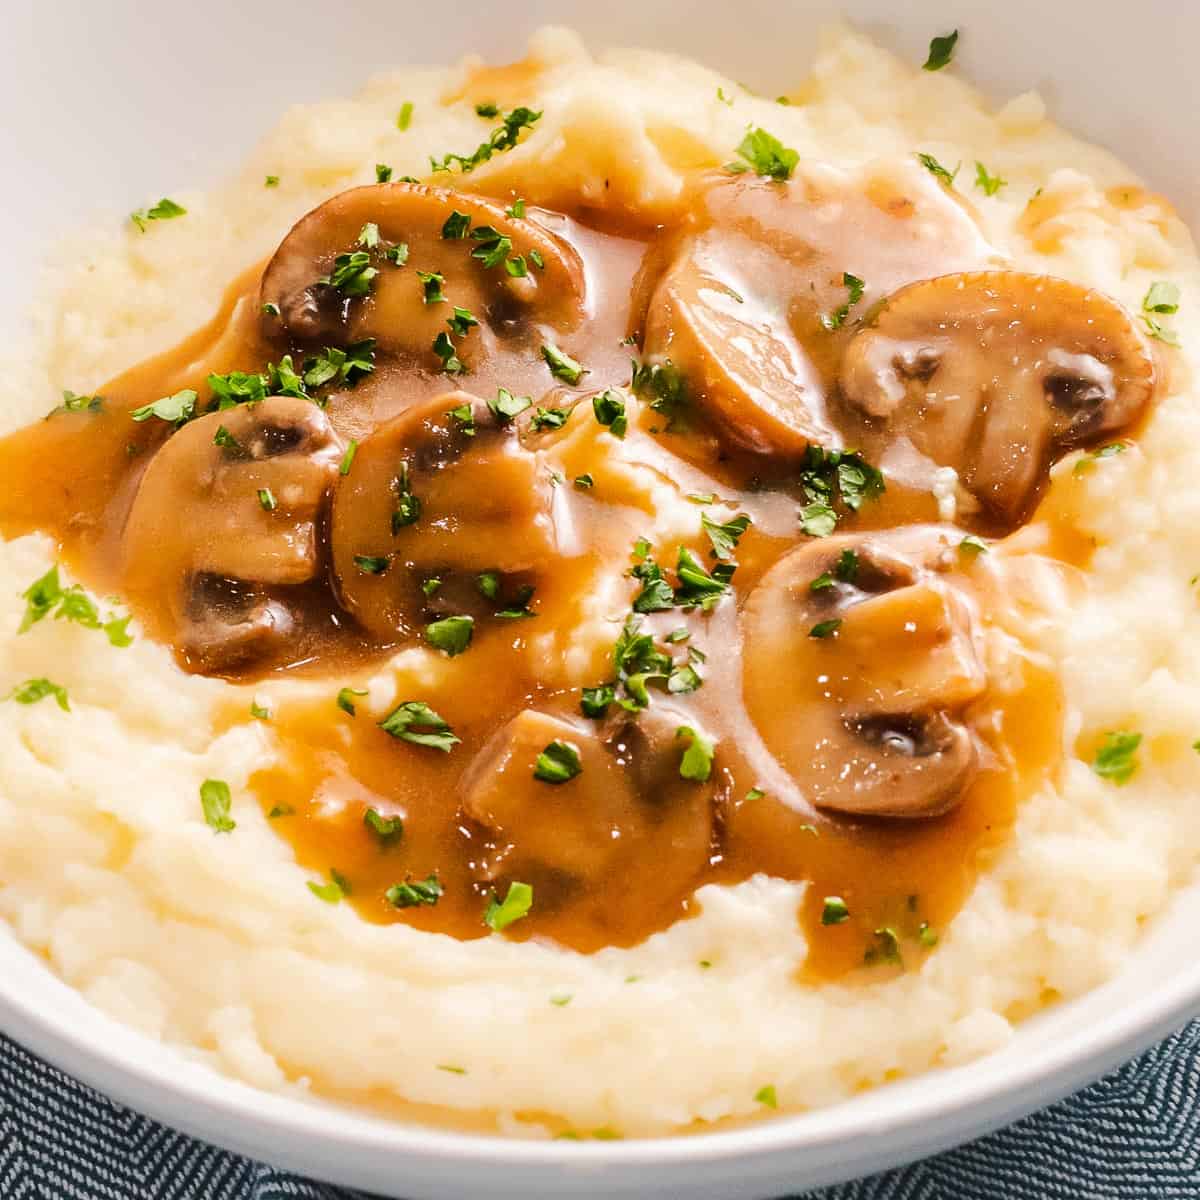 Vegan mushroom gravy with mushrooms over mashed potatoes.